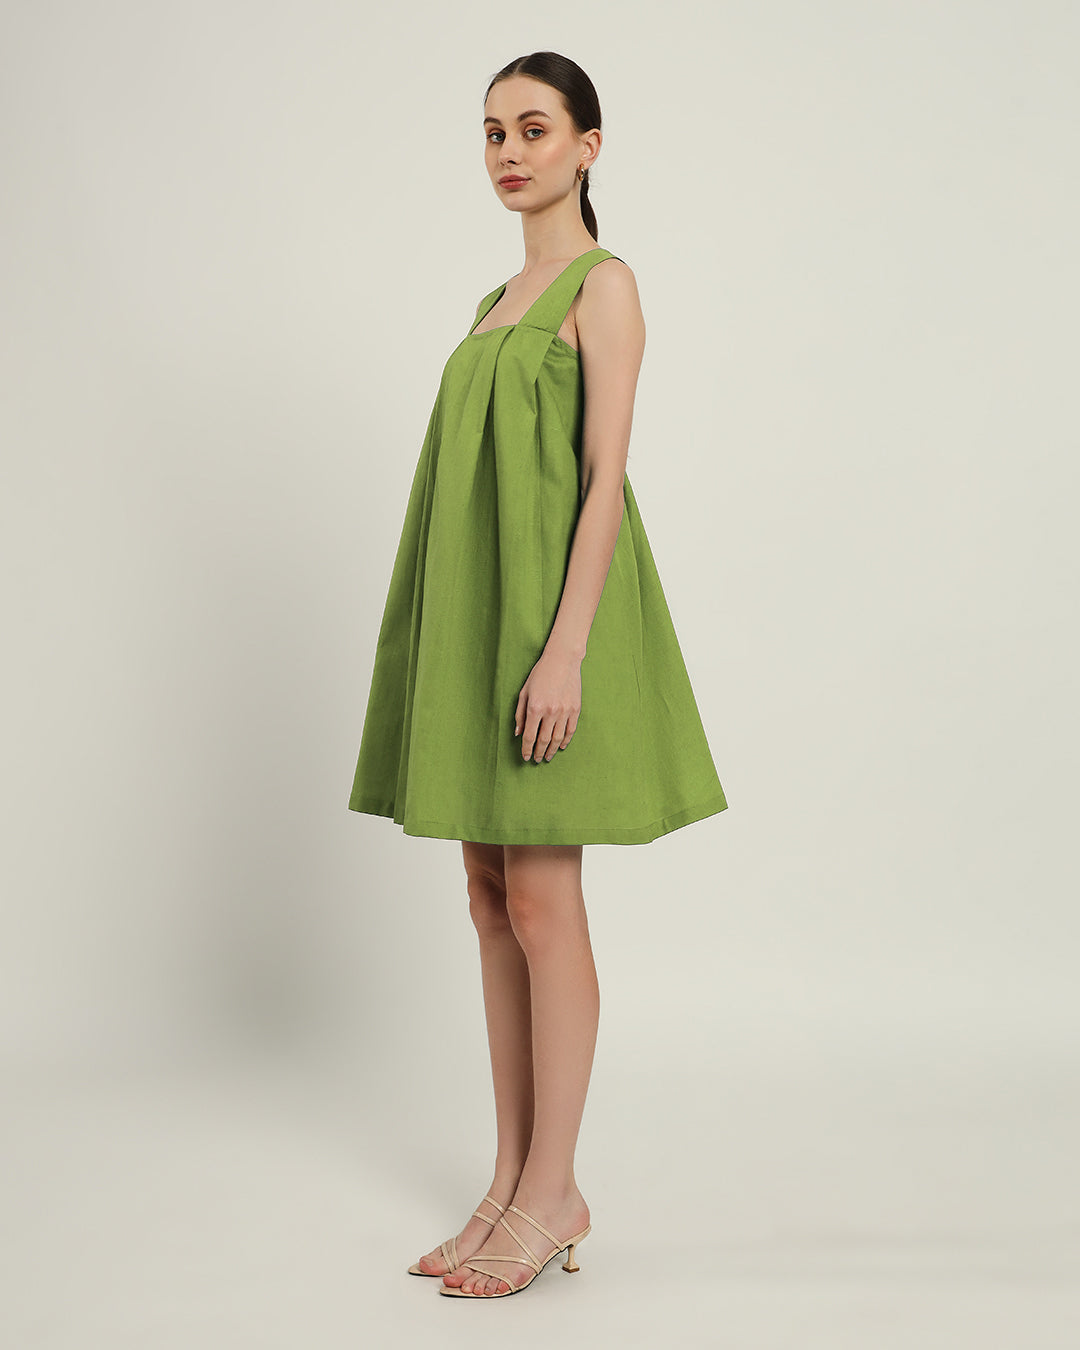 The Larissa Fern Cotton Dress